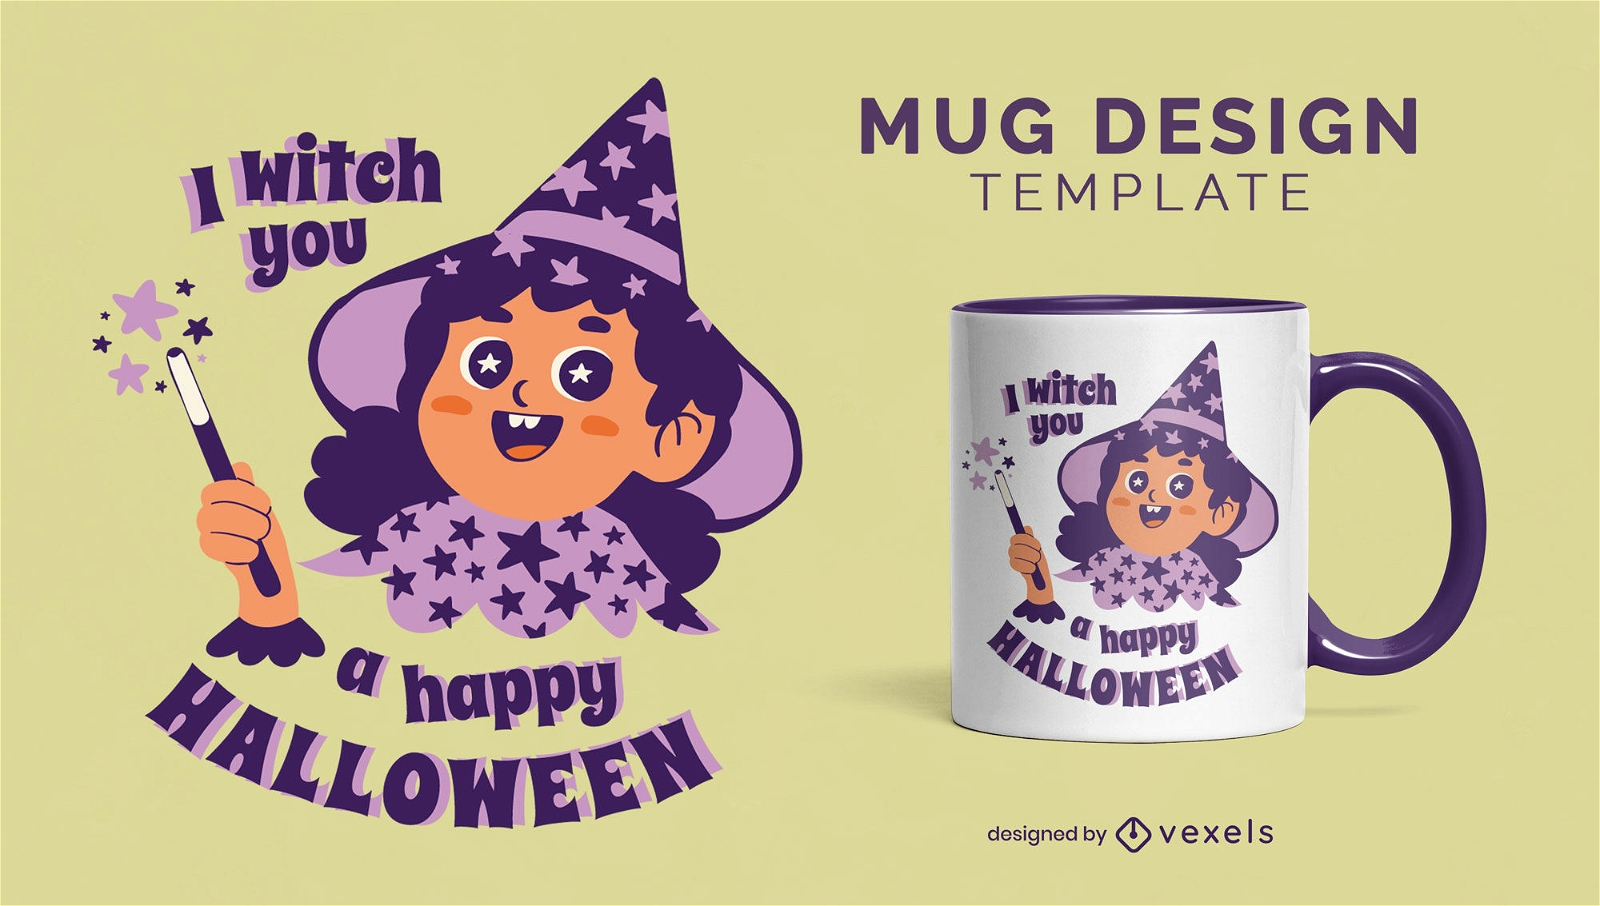 Happy Halloween friendly witch mug design